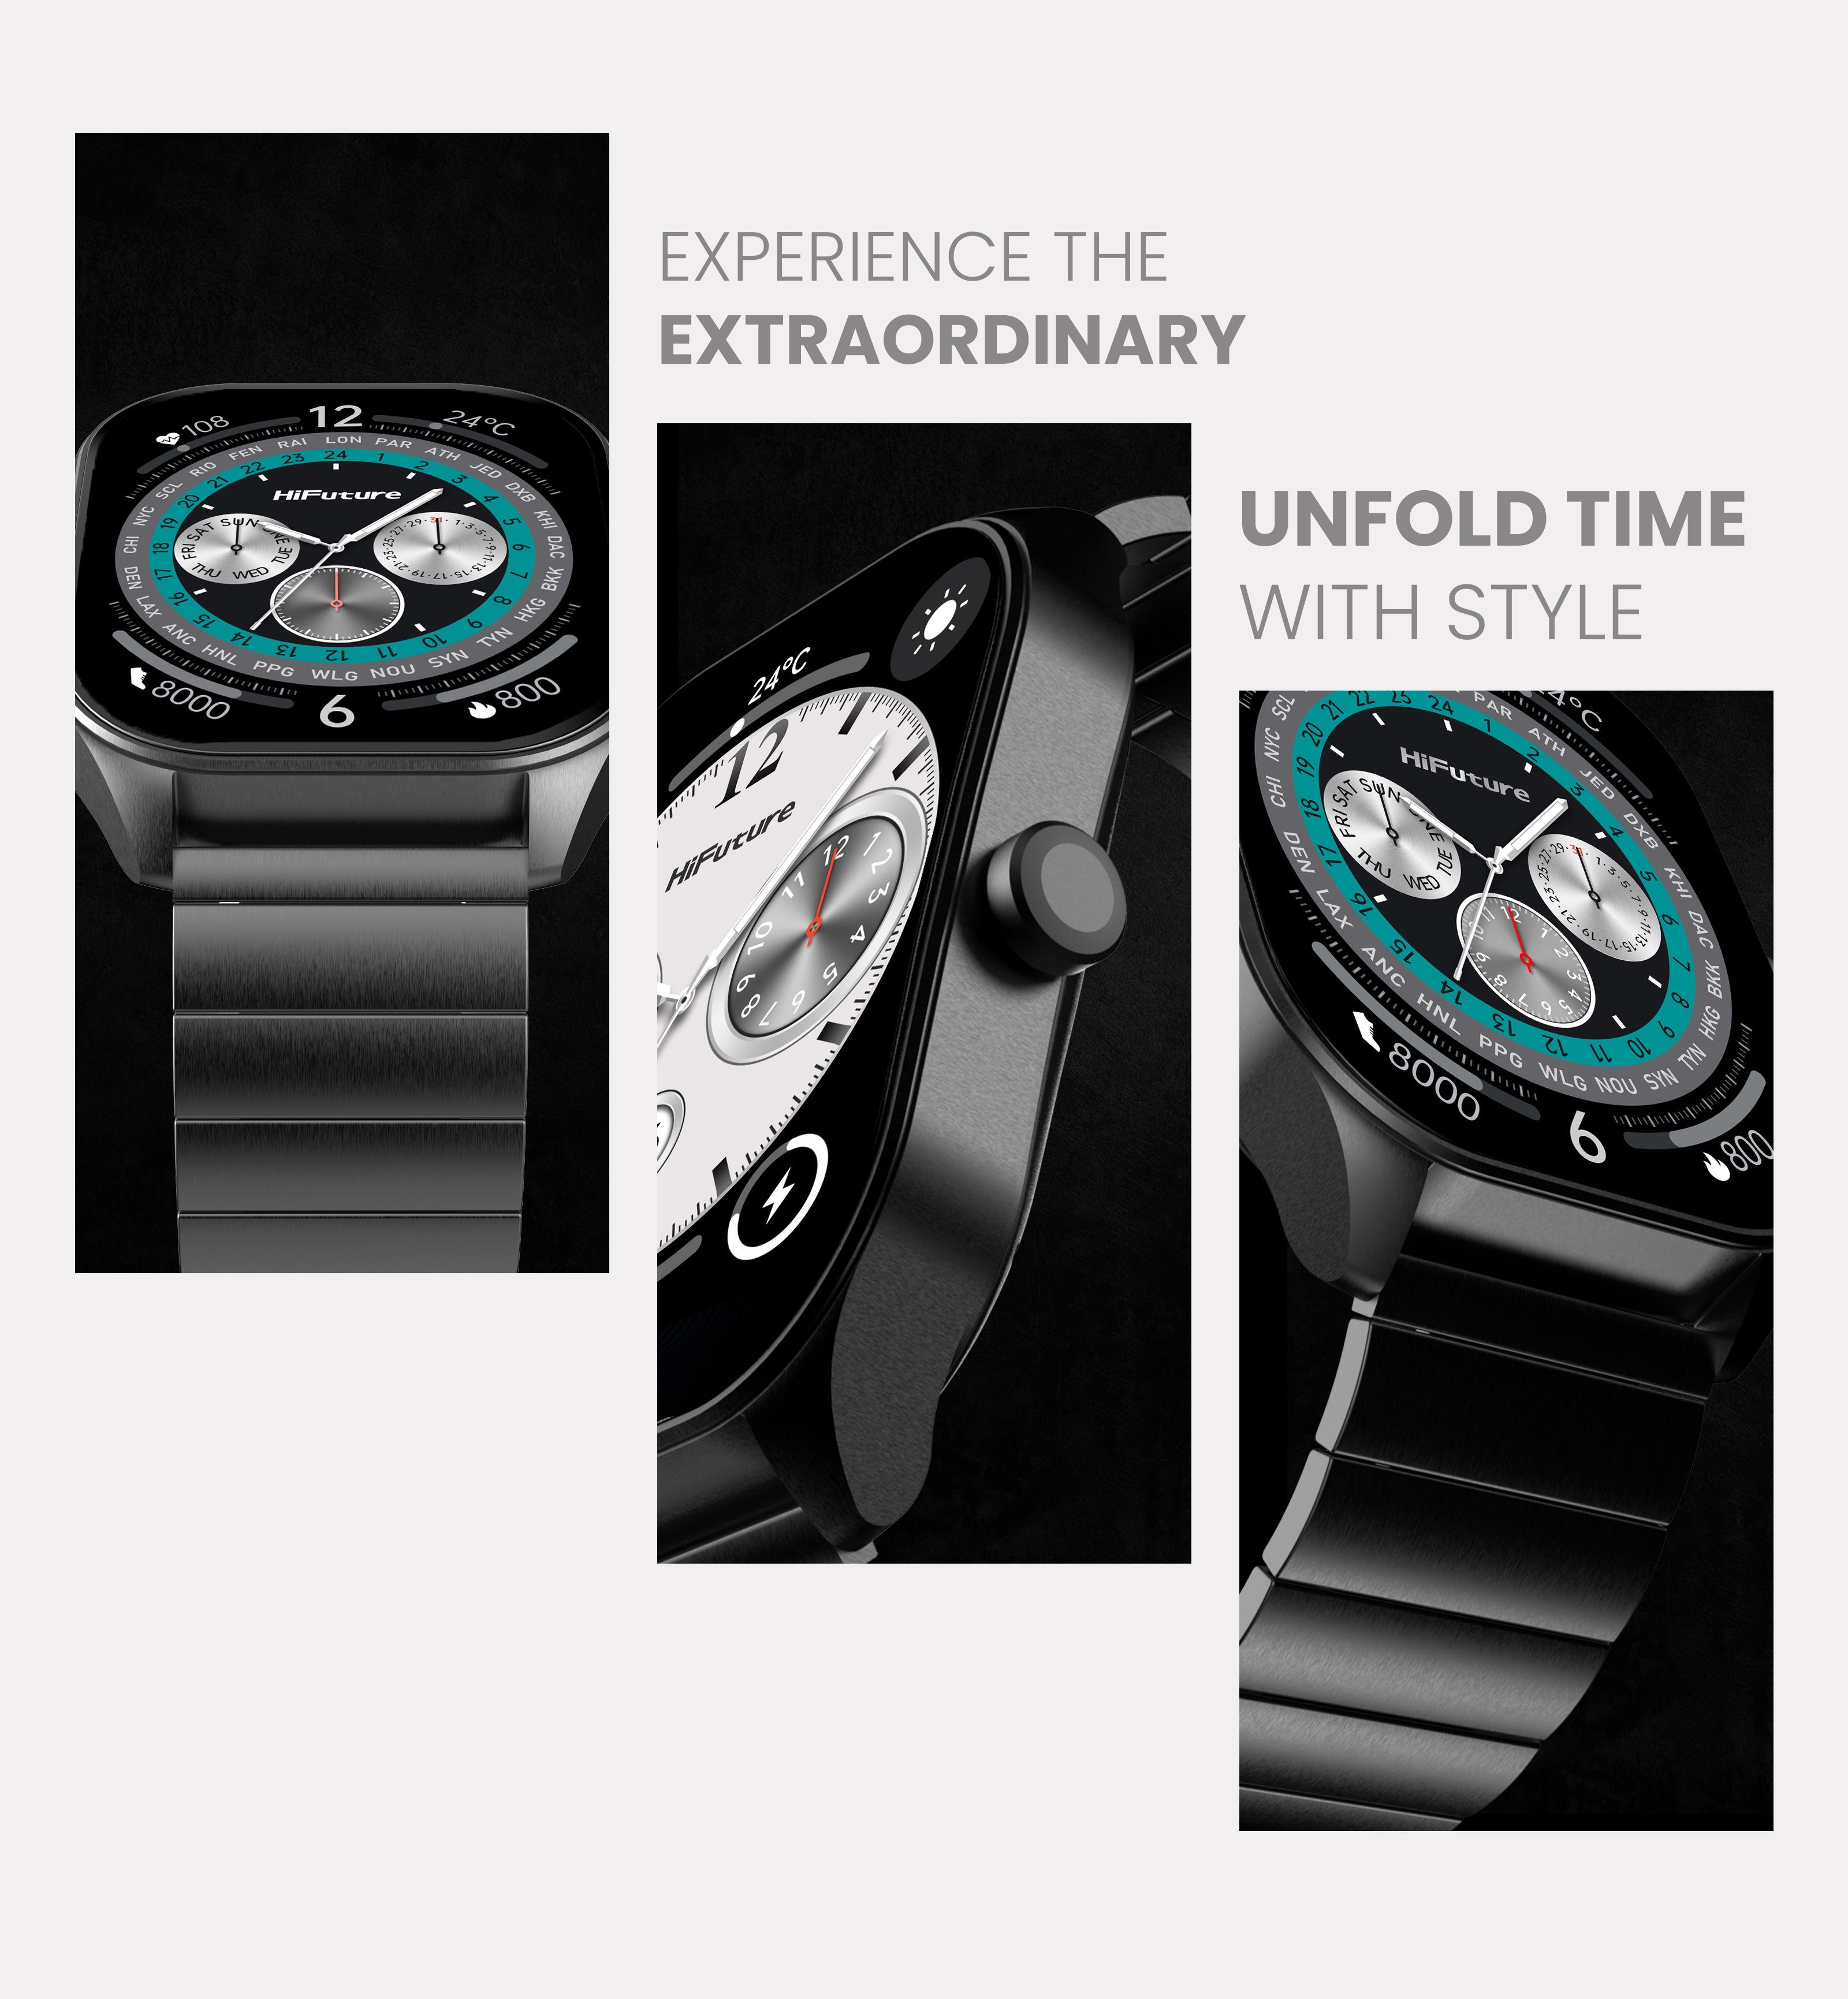 Apex smartwatch with stunning metallic frame